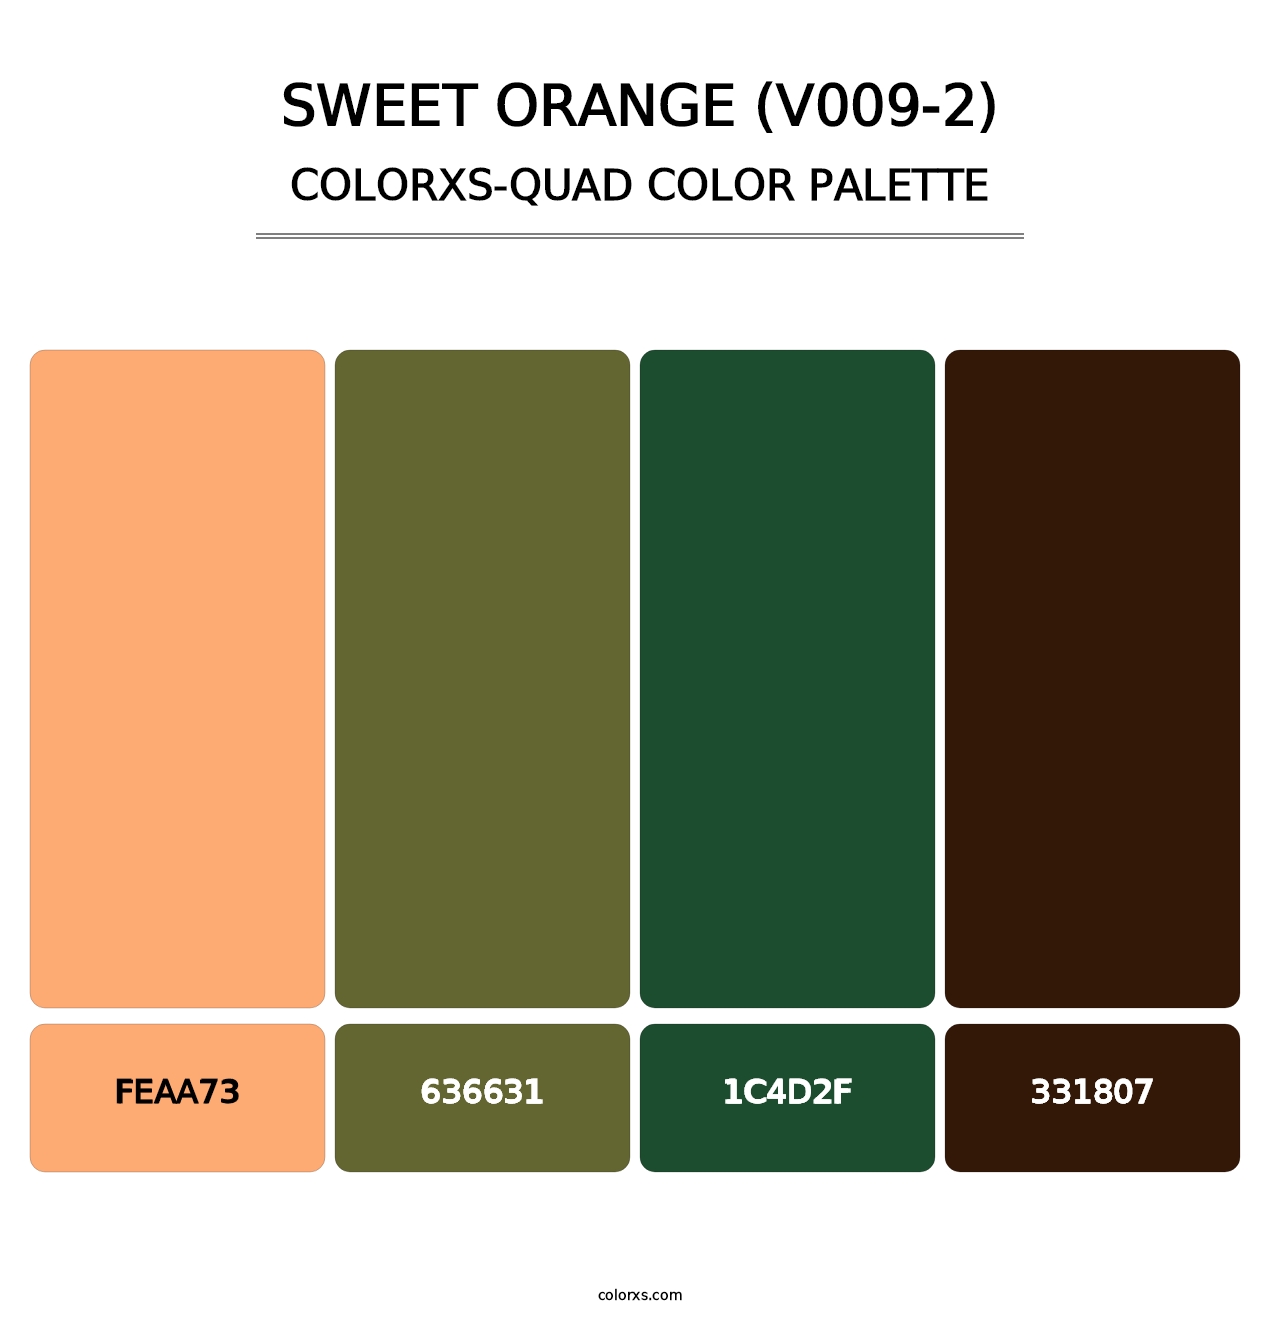 Sweet Orange (V009-2) - Colorxs Quad Palette